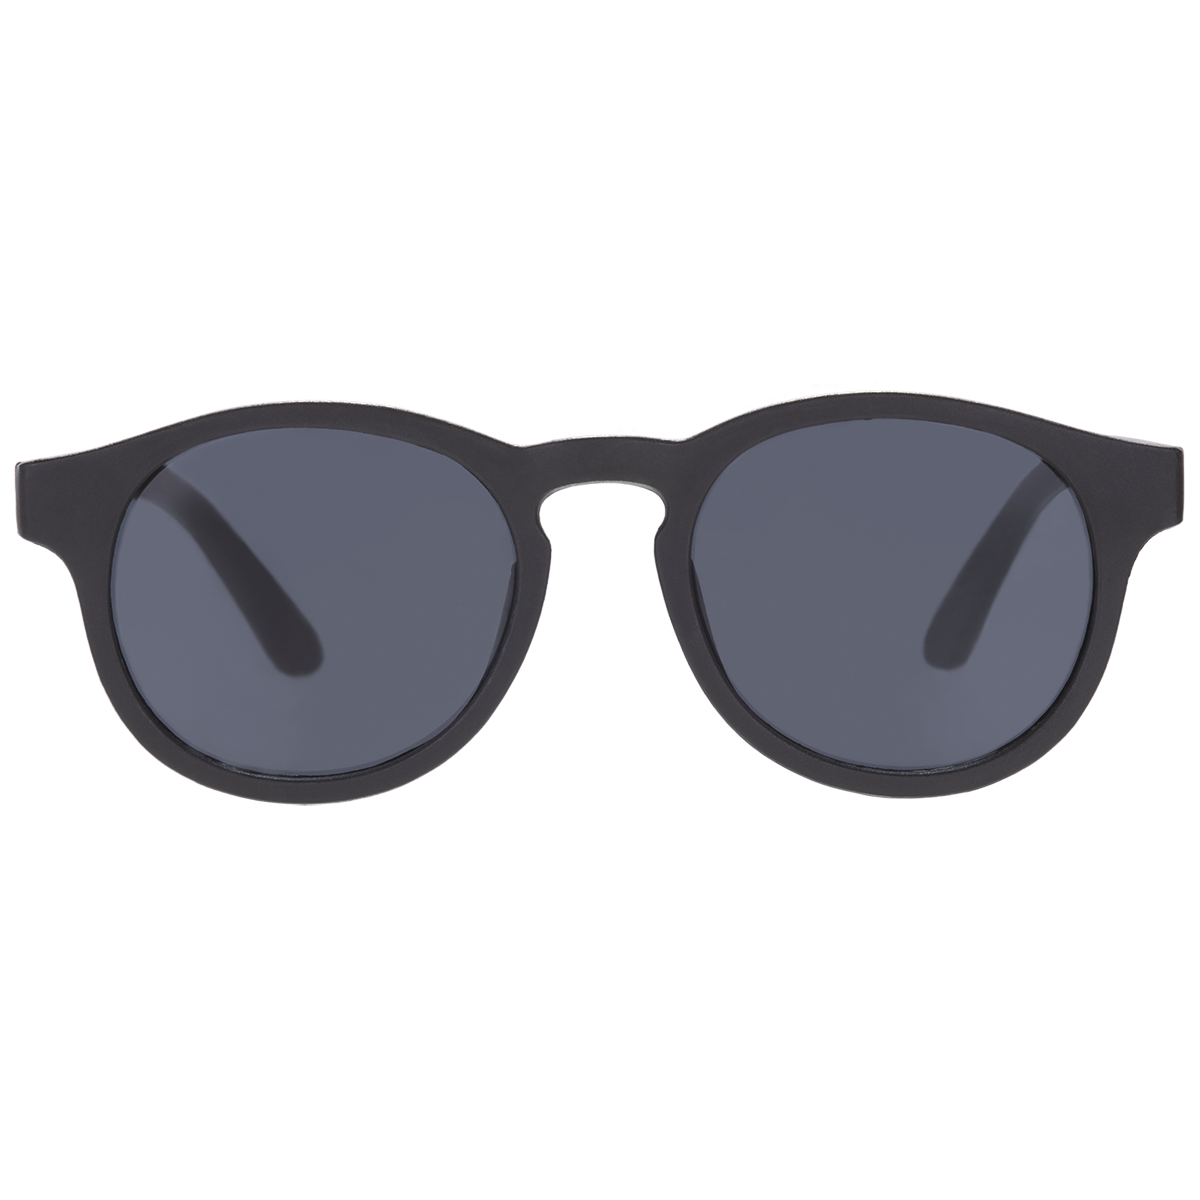 Babiators Original Keyholder: Black Ops Kids Sunglasses Babiators   